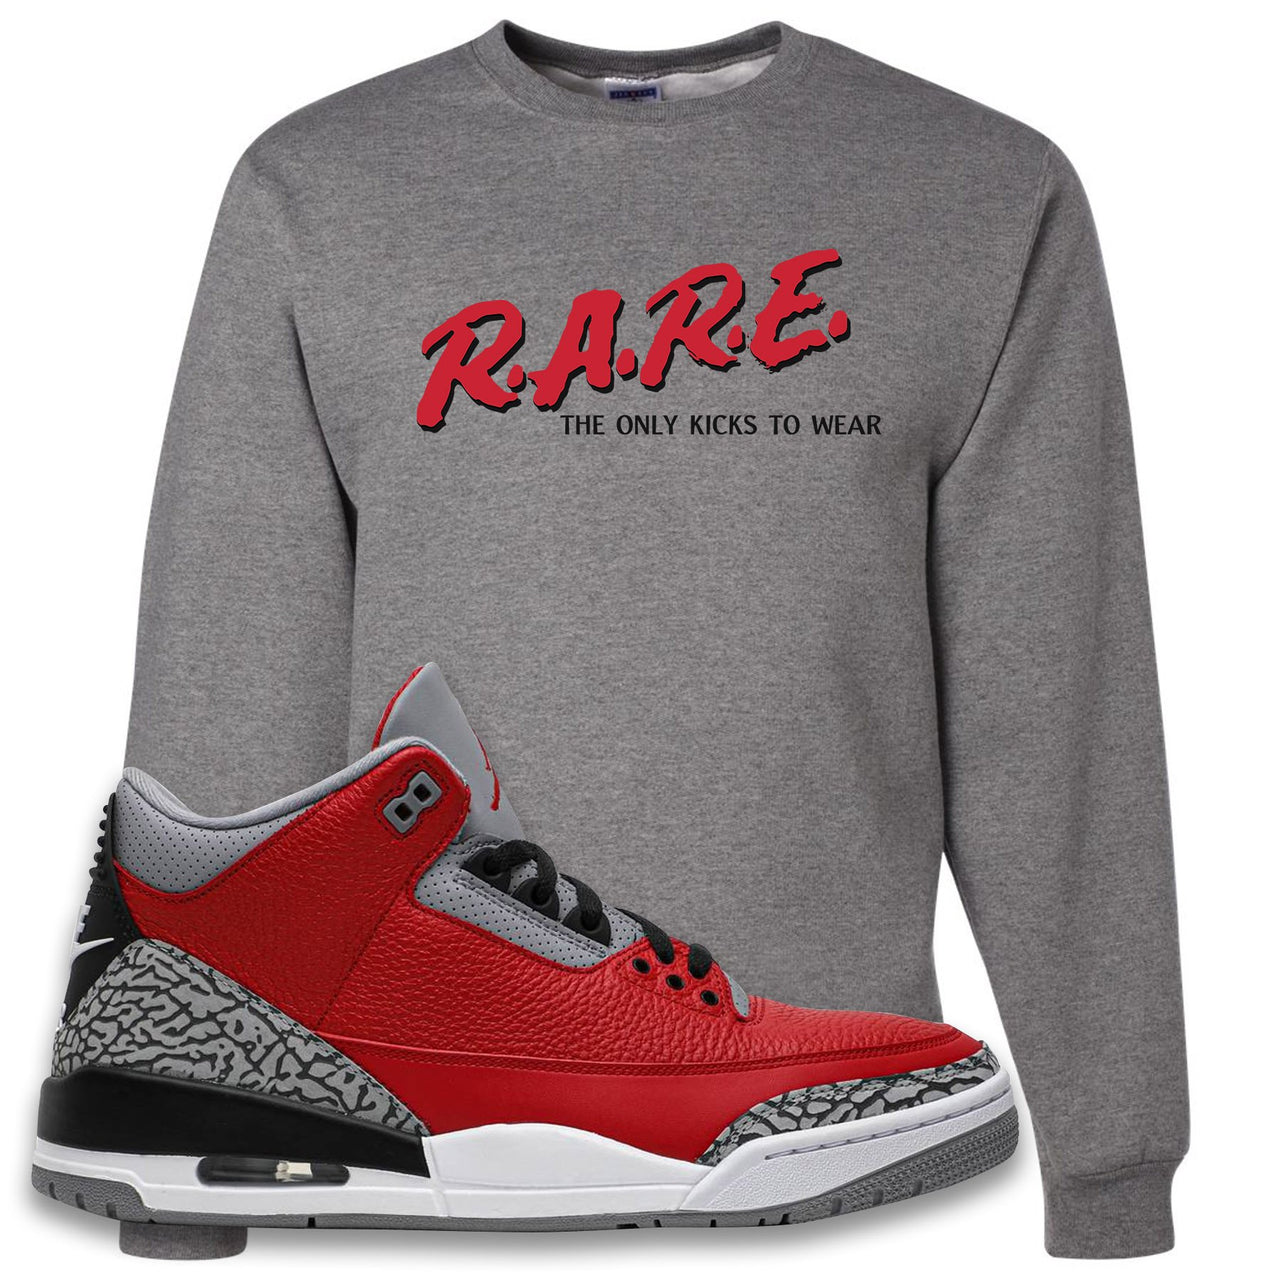 Chicago Exclusive Jordan 3 Red Cement Sneaker Oxford Crewneck Sweatshirt | Crewneck to match Jordan 3 All Star Red Cement Shoes | Rare